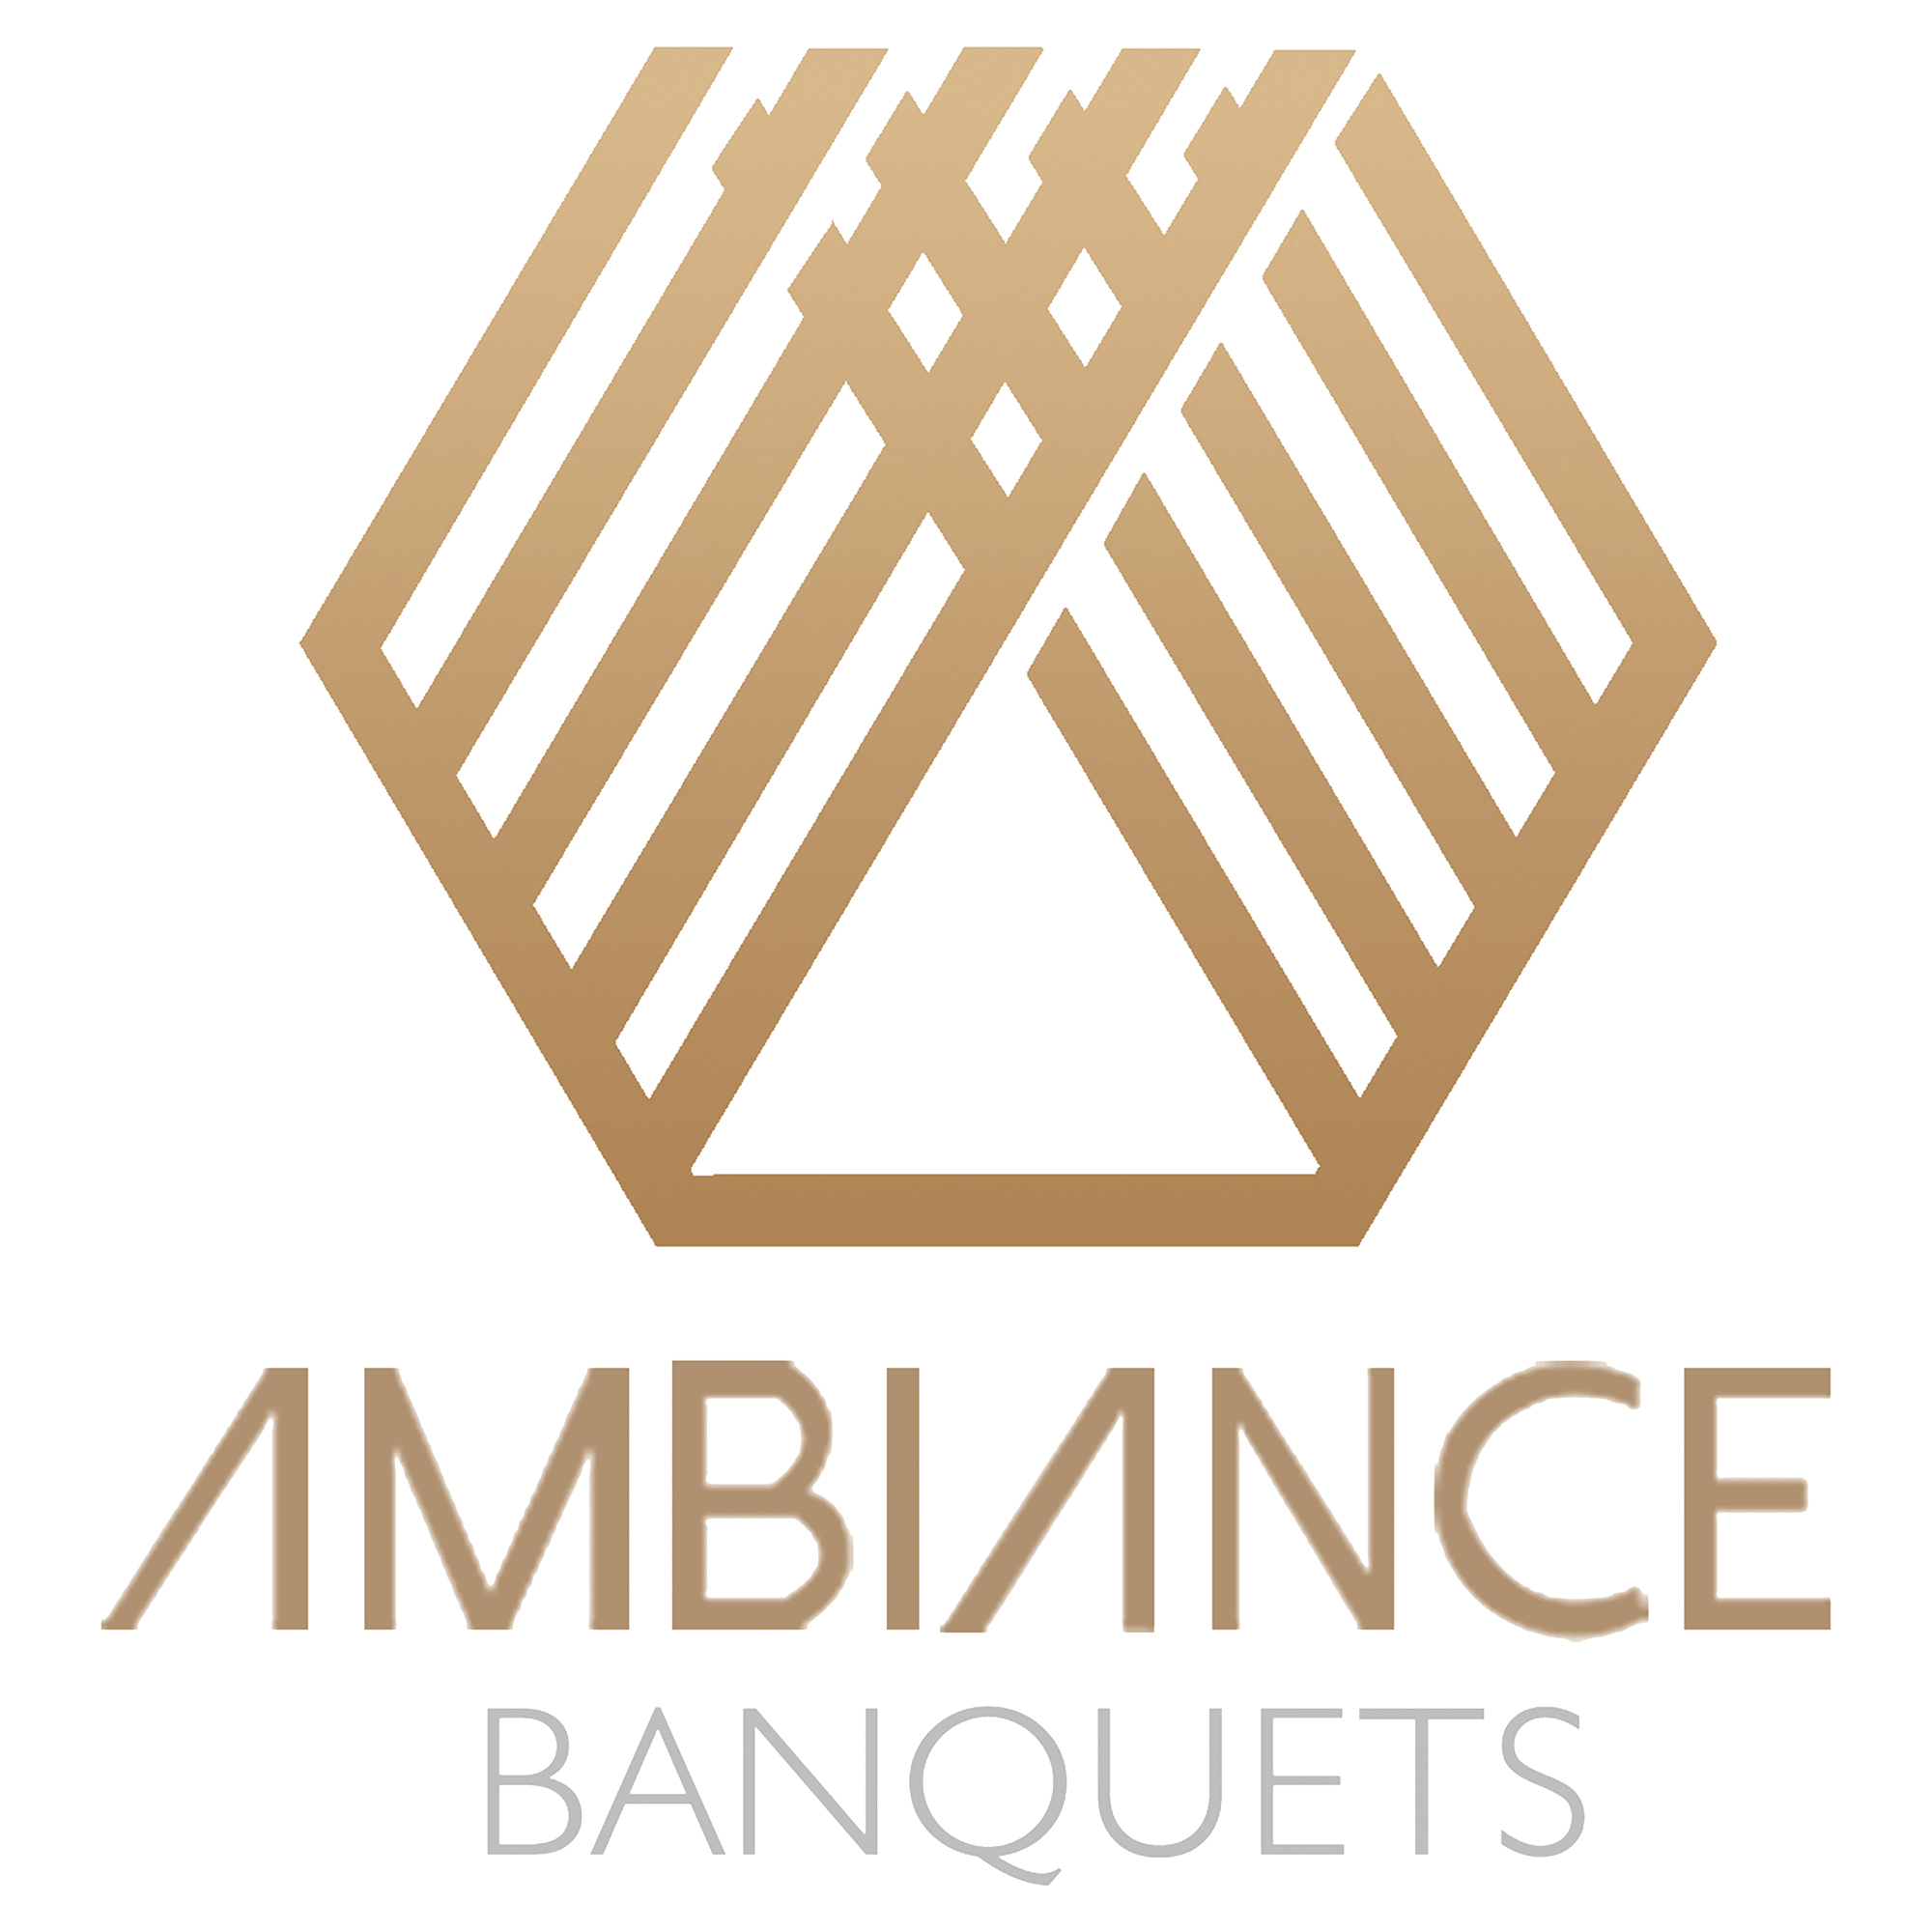 Ambiance Banquets logo png-min